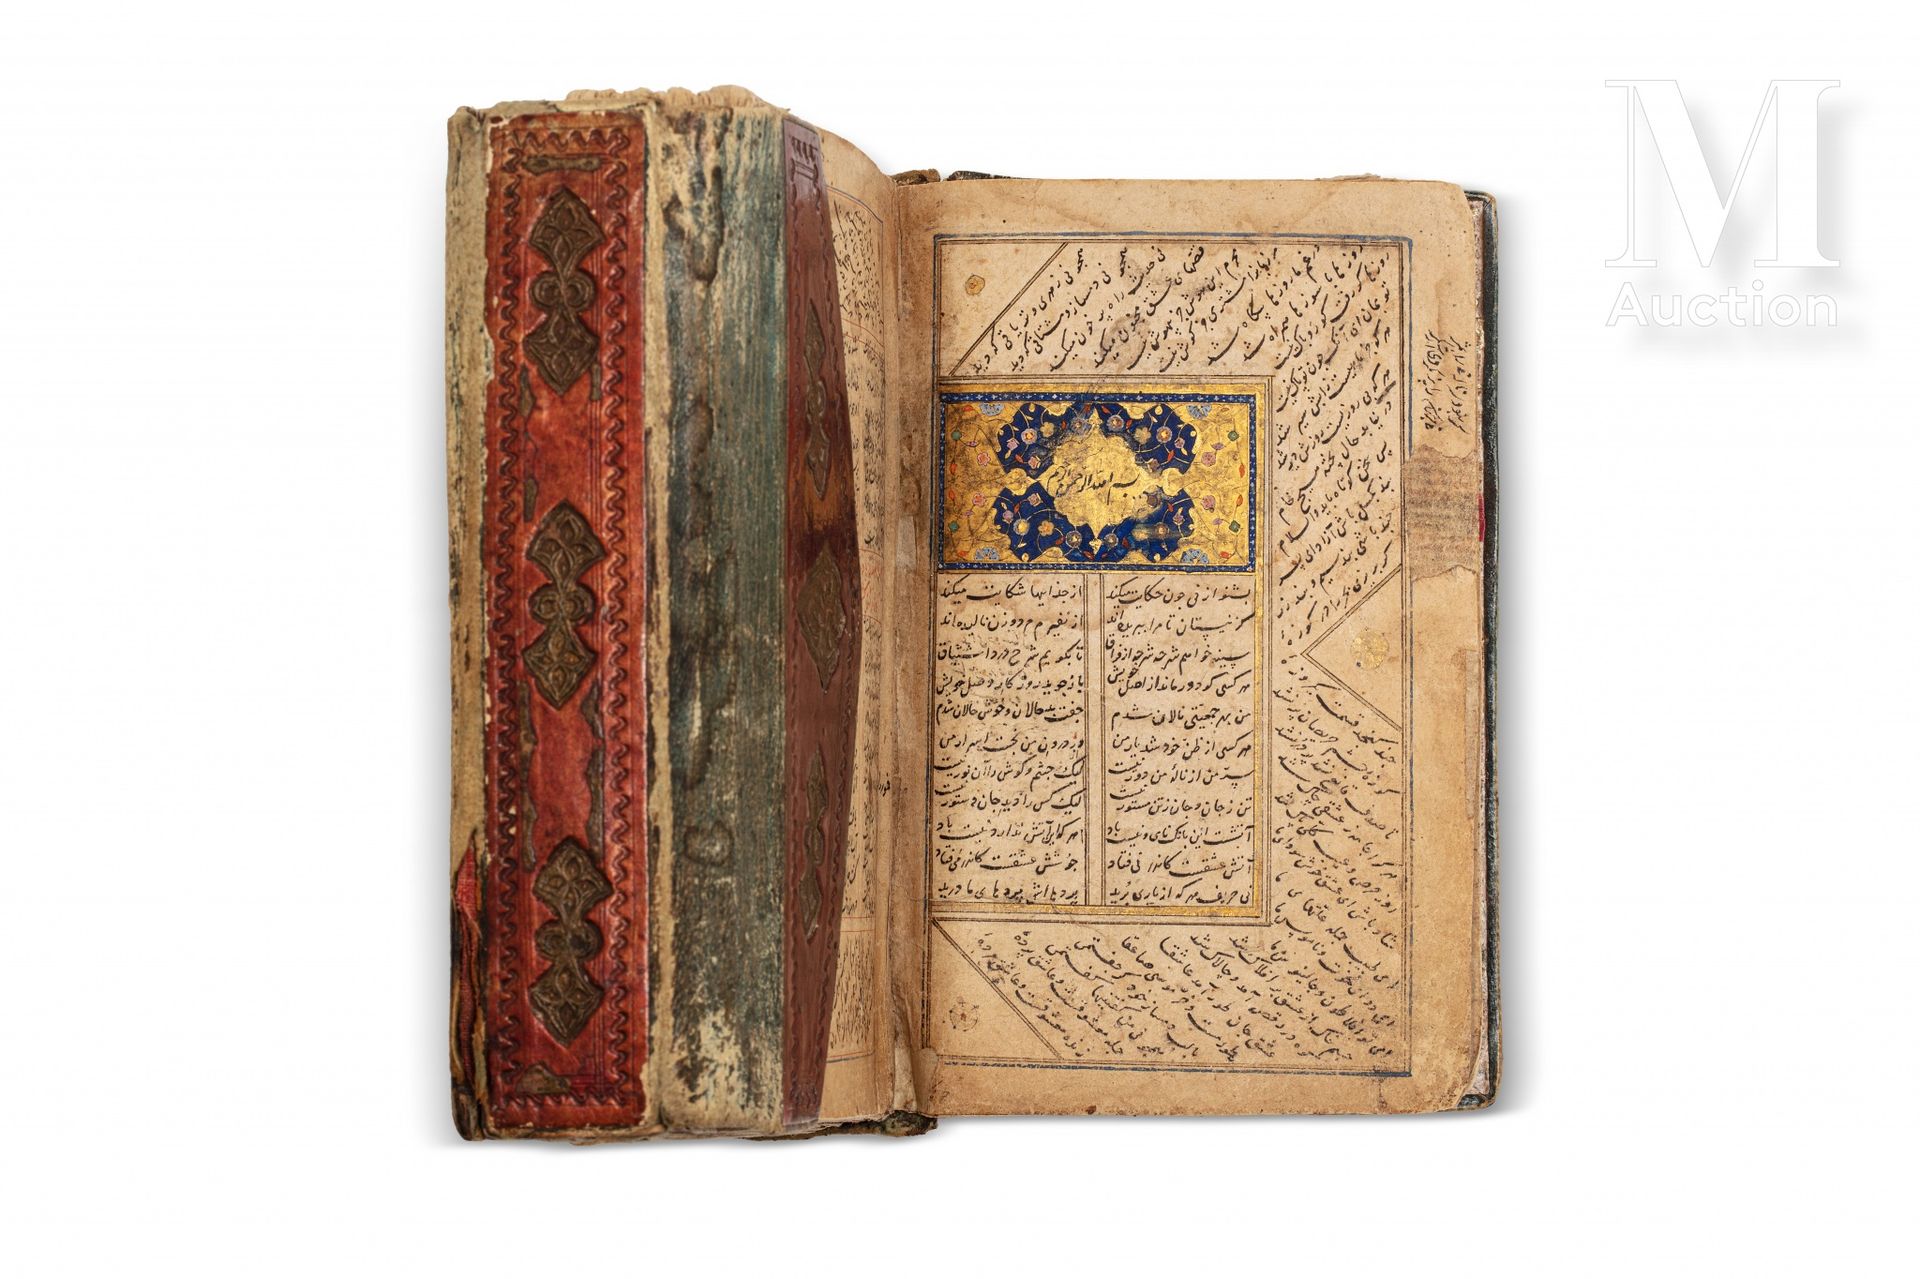 Mathnawi de Jalal al-Dîn Rûmî (m.1273) Iran, datiert 846H. (=1442 n. Chr.)

Pers&hellip;